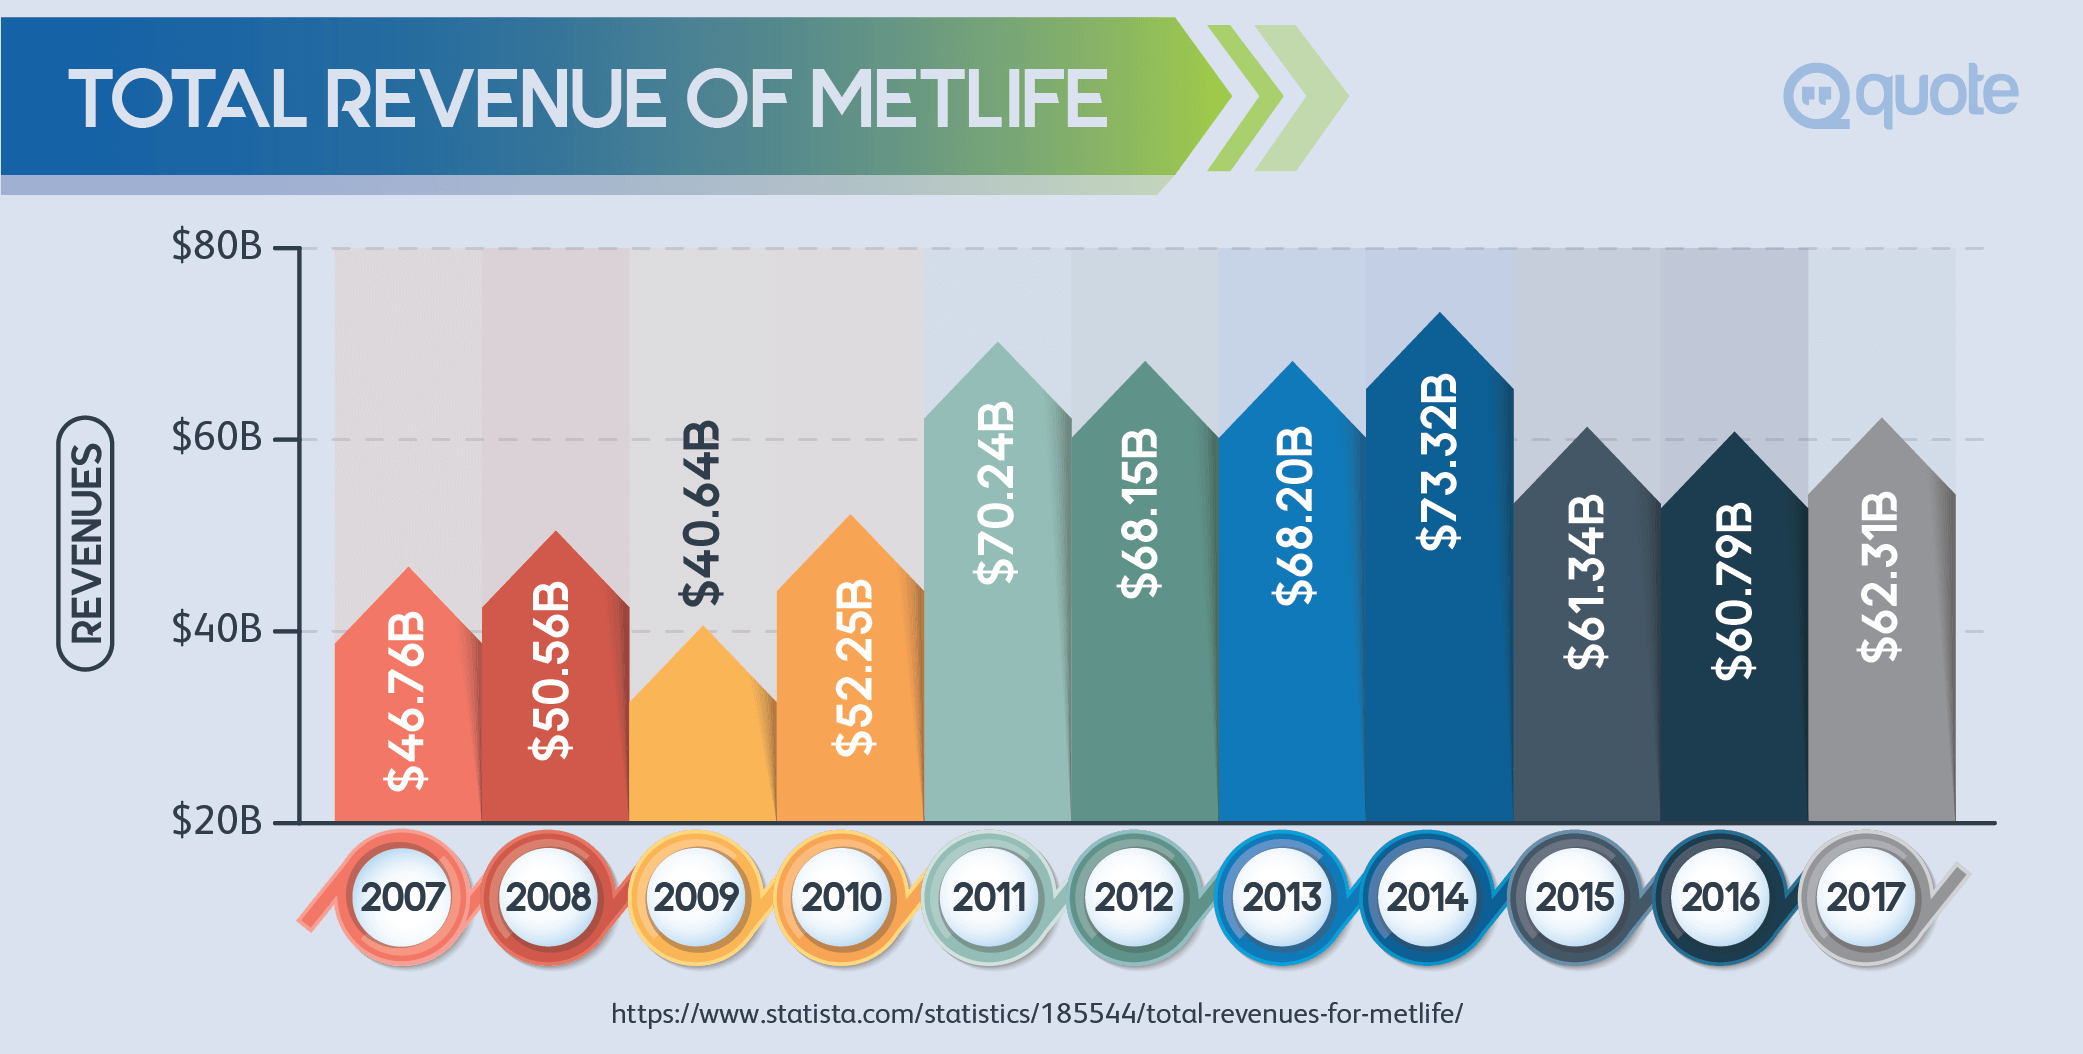 Total Revenue of MetLife from 2007-2017